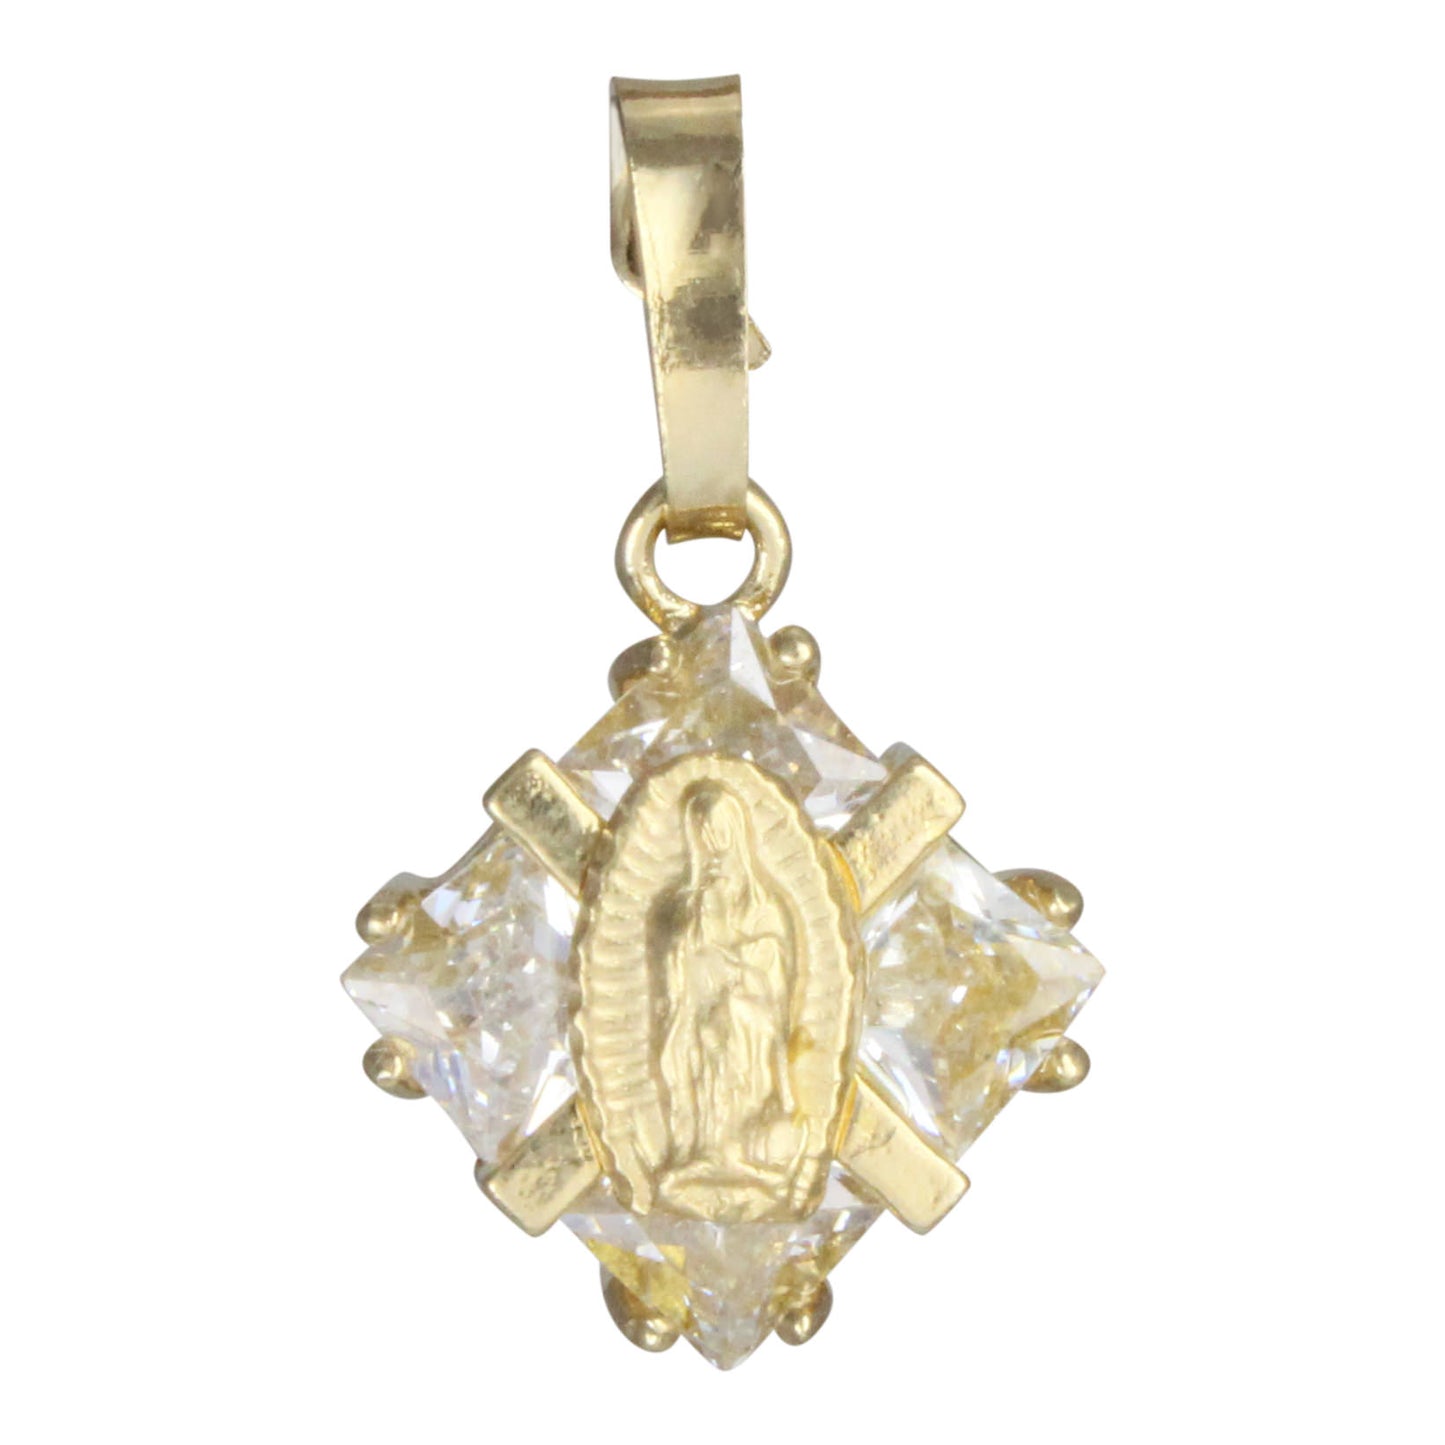 Dije Rombo de la Virgen de Guadalupe en chapa de oro 14K y cristal de Zircon